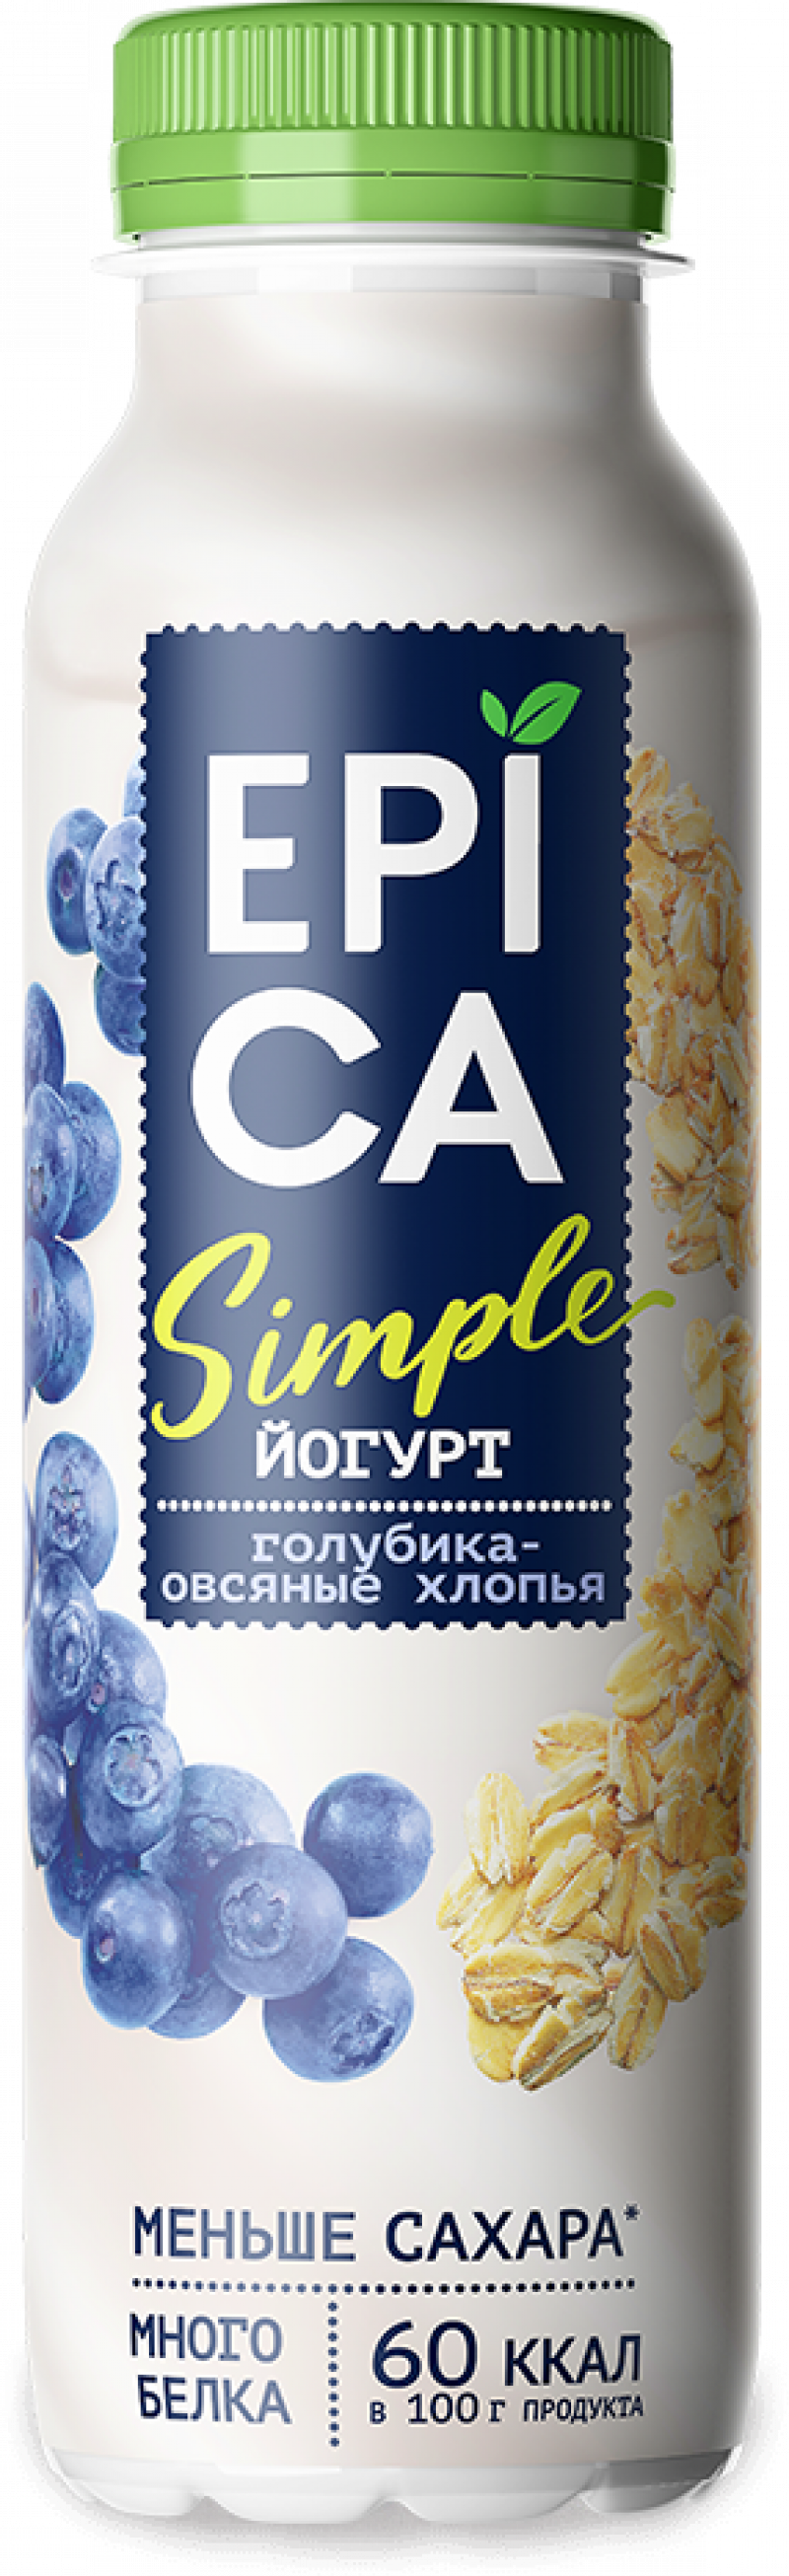 Йогурт Epica Simple 1.2% 290г БУТ Голуб-Овсянка